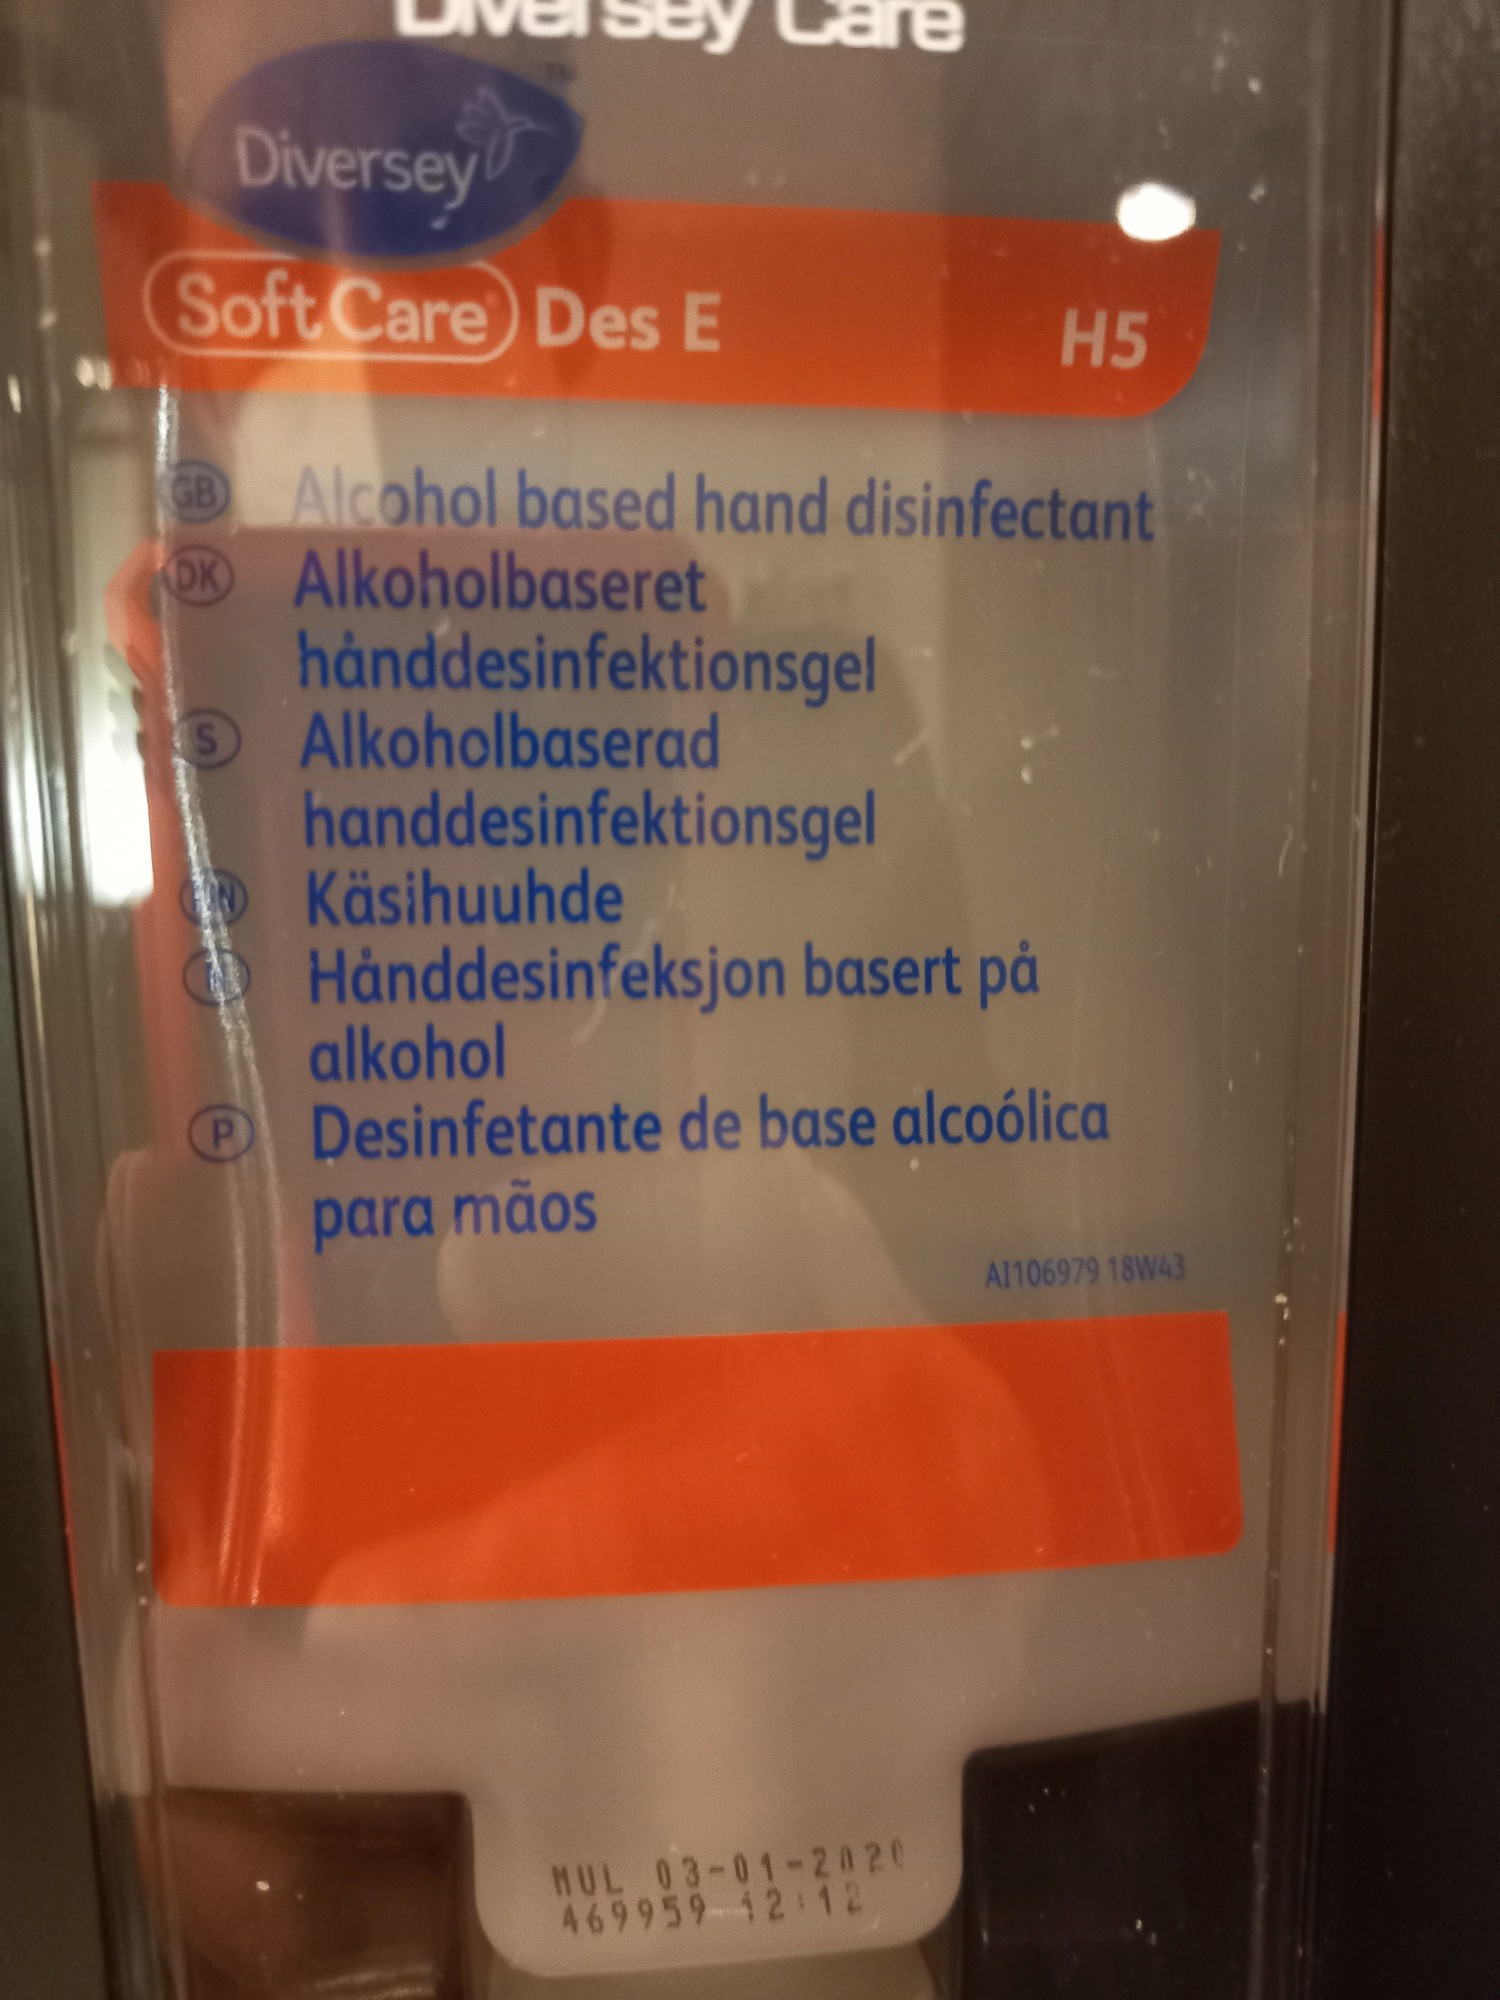 Desinfektionsmittel auf Finnisch: Käsihuuhde